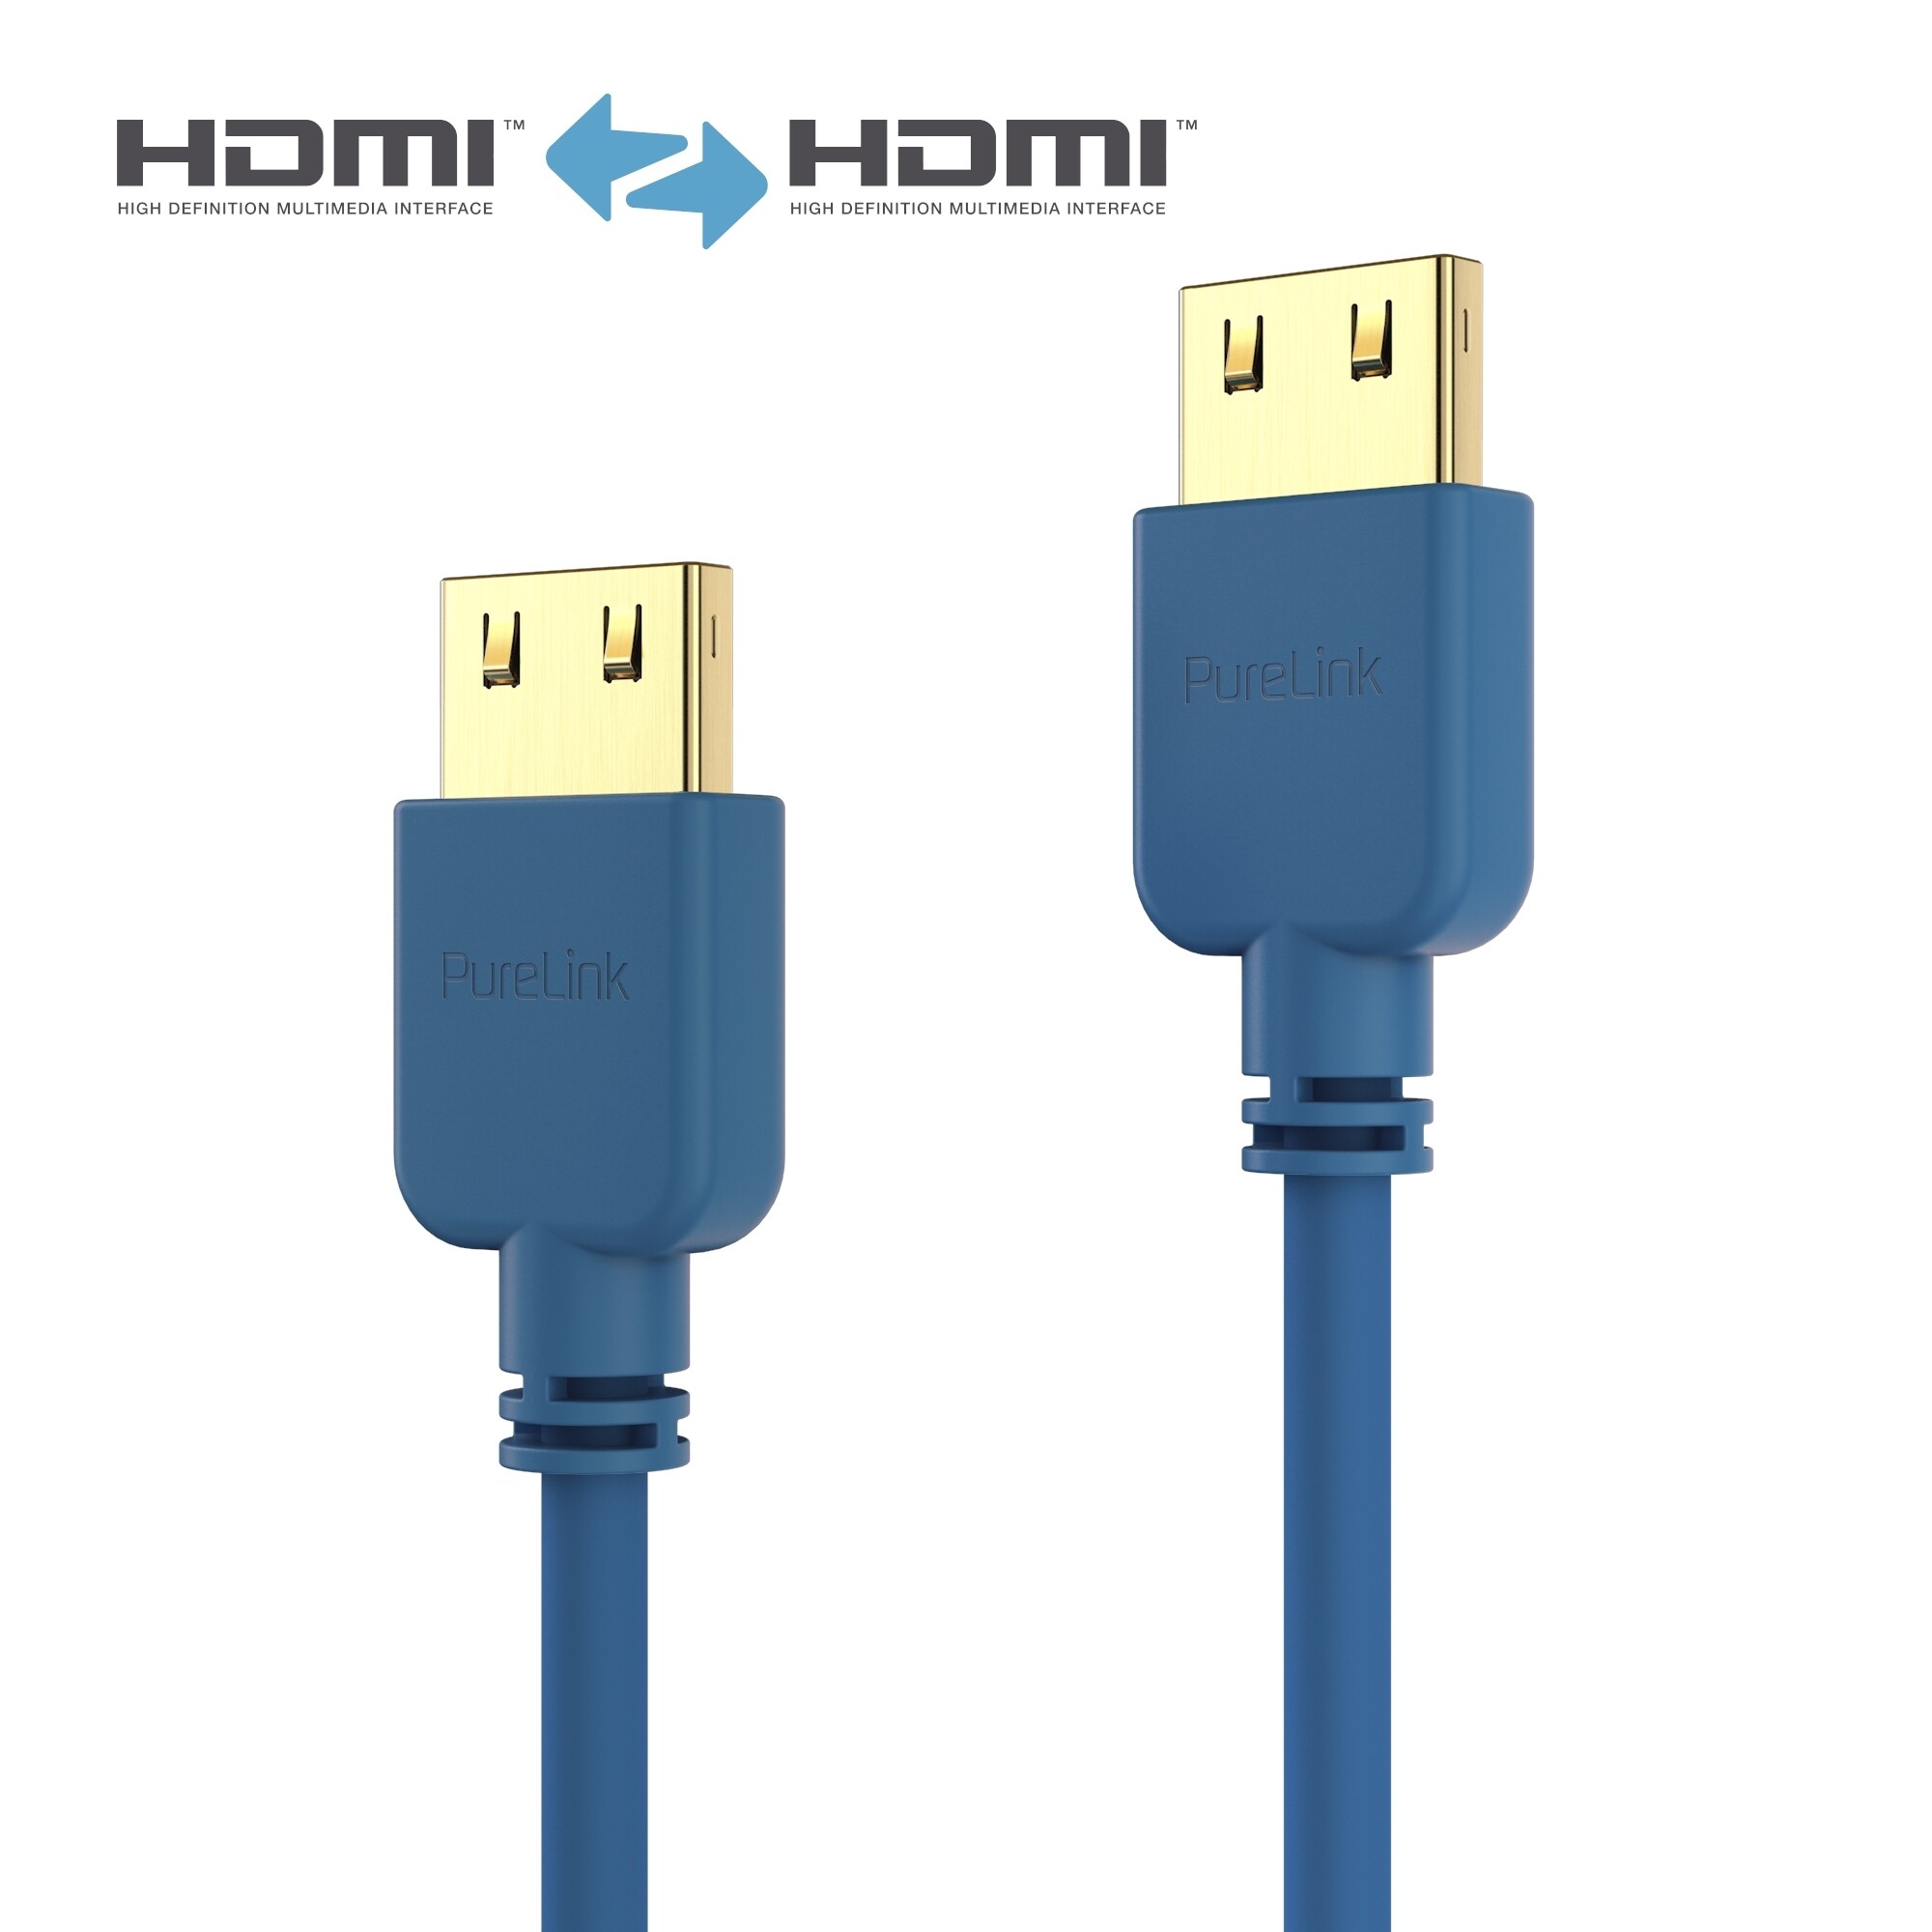 Purelink-PI0502-015-HDMI-Kabel-SuperThin-1-5m-blau